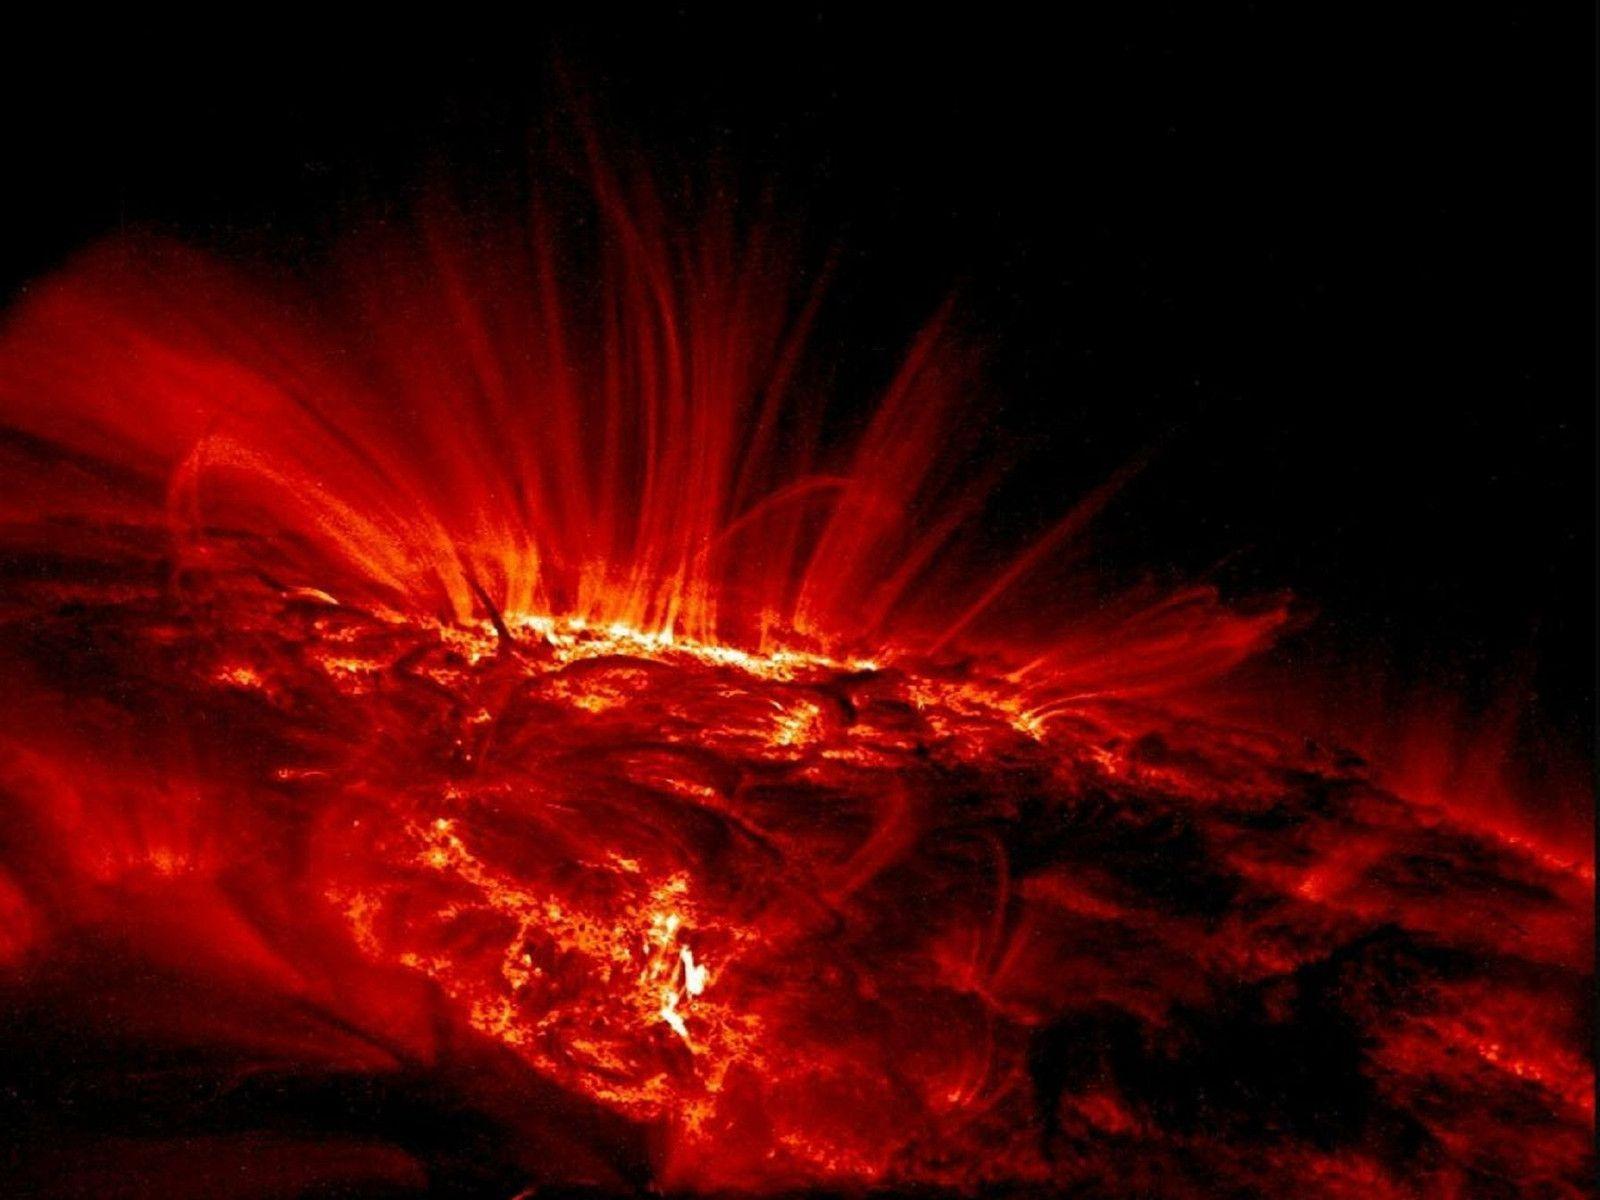 The Suns Solar Flares, Nasa, Desktop and mobile wallpaper